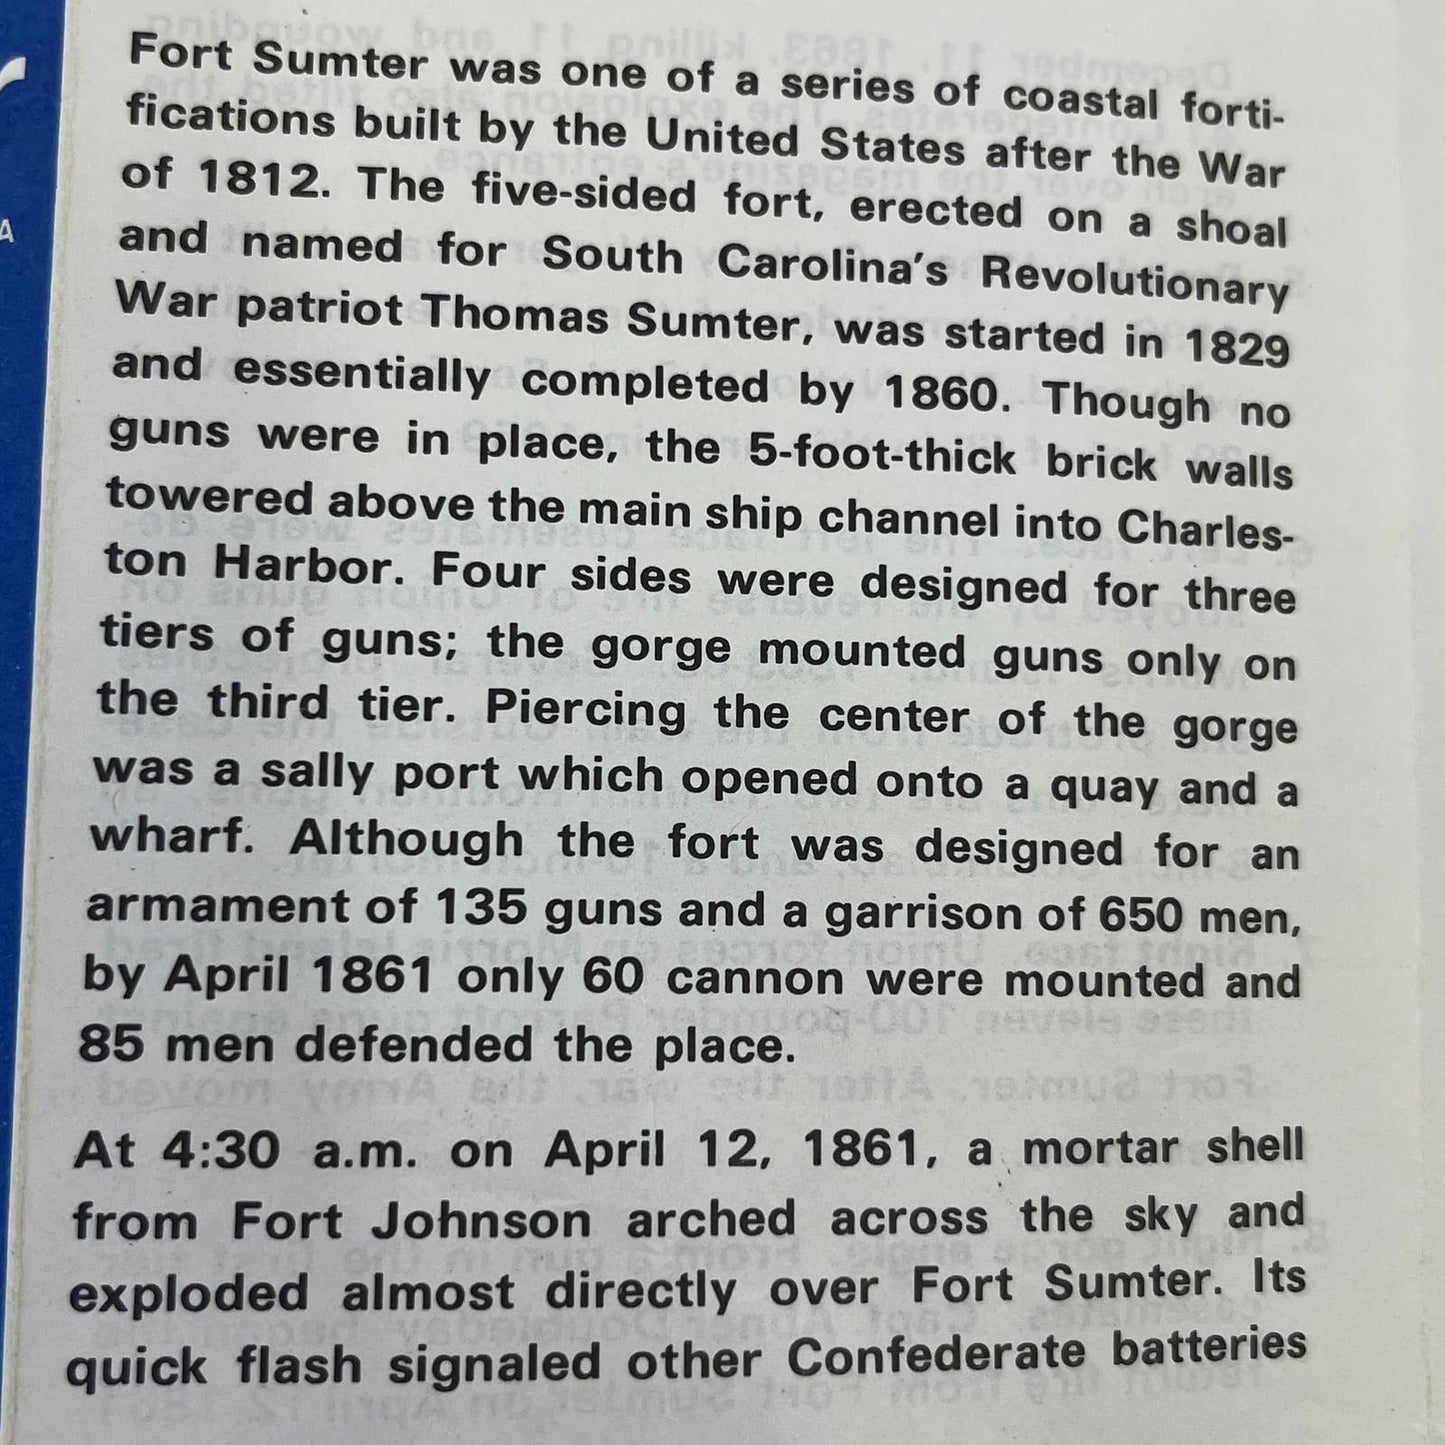 1977 Fort Sumter National Monument  Walking Tour Leaflet & Fold Out Map TG6